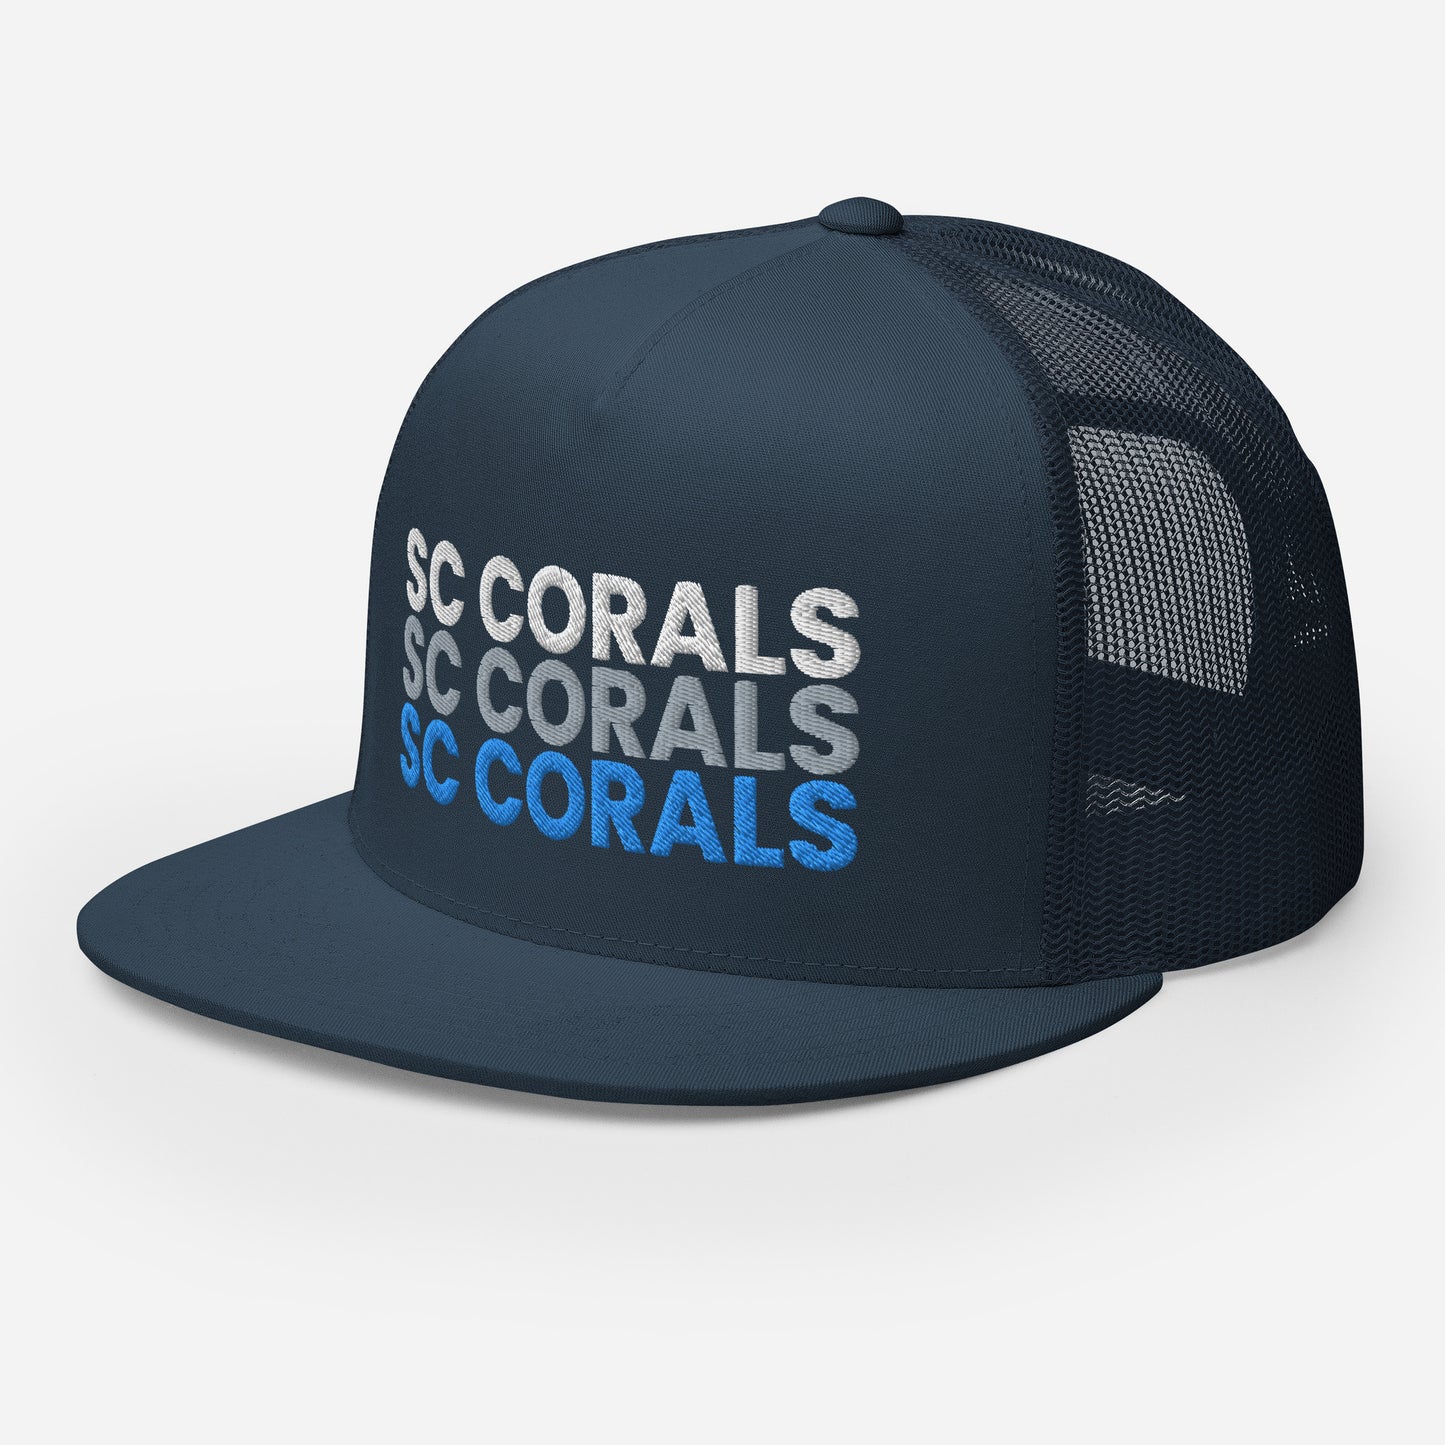 SC Corals Official Trucker Hat